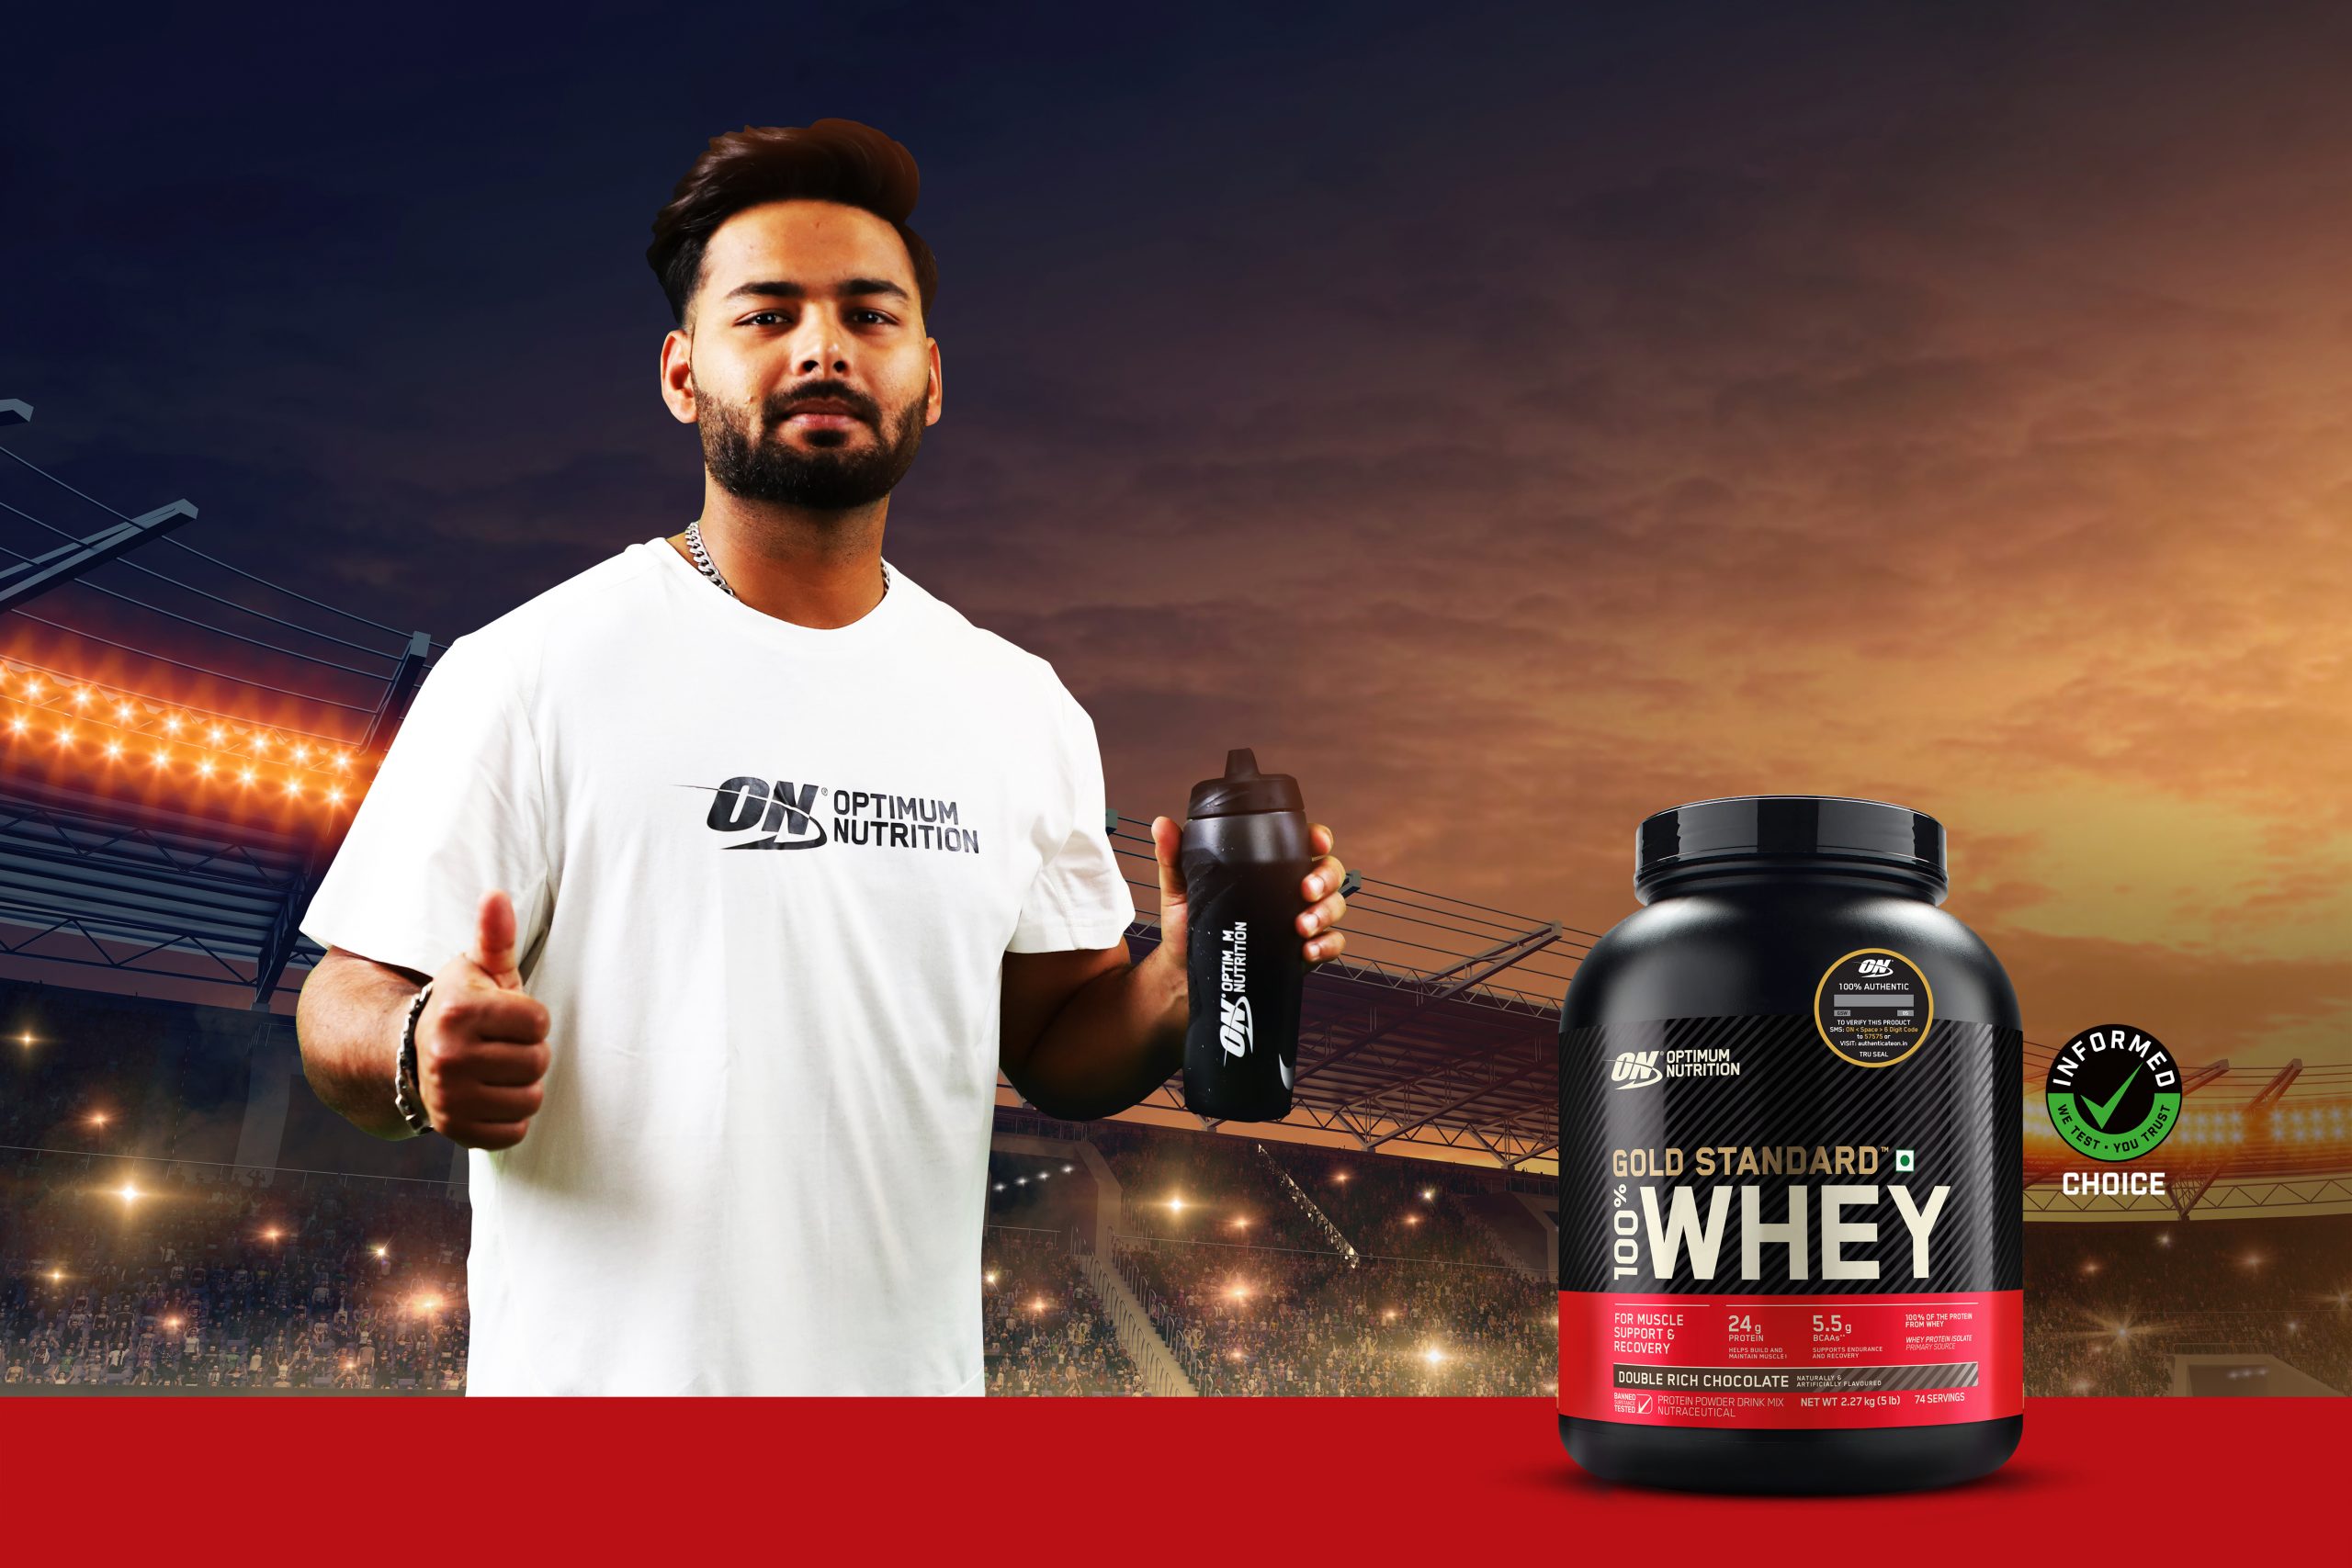 Optimum Nutrition names Rishabh Pant as their brand athlete